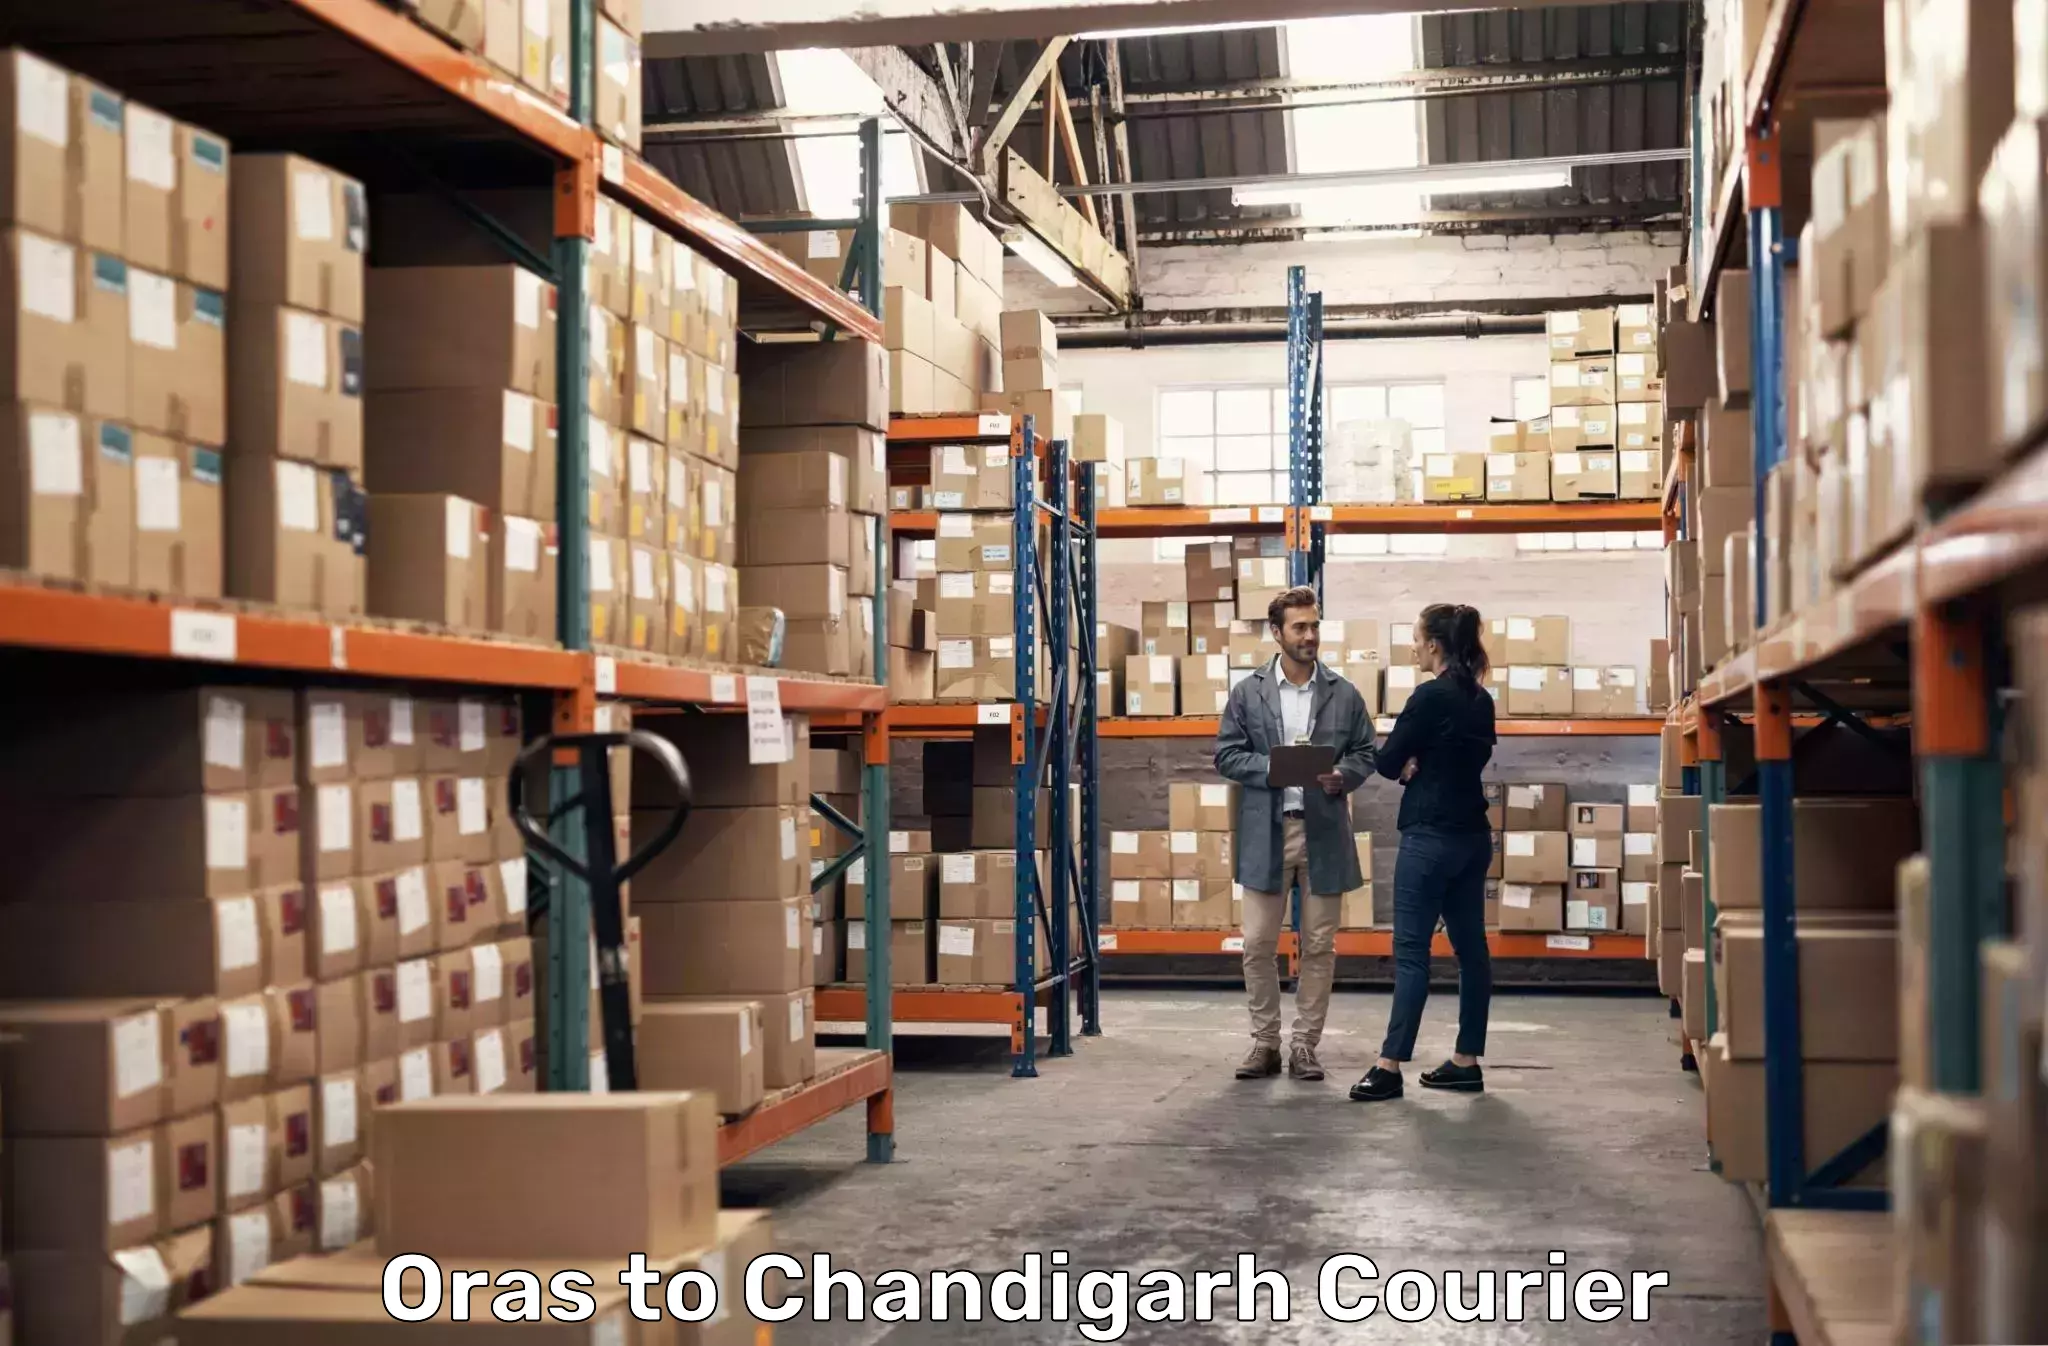 Doorstep delivery service Oras to Chandigarh